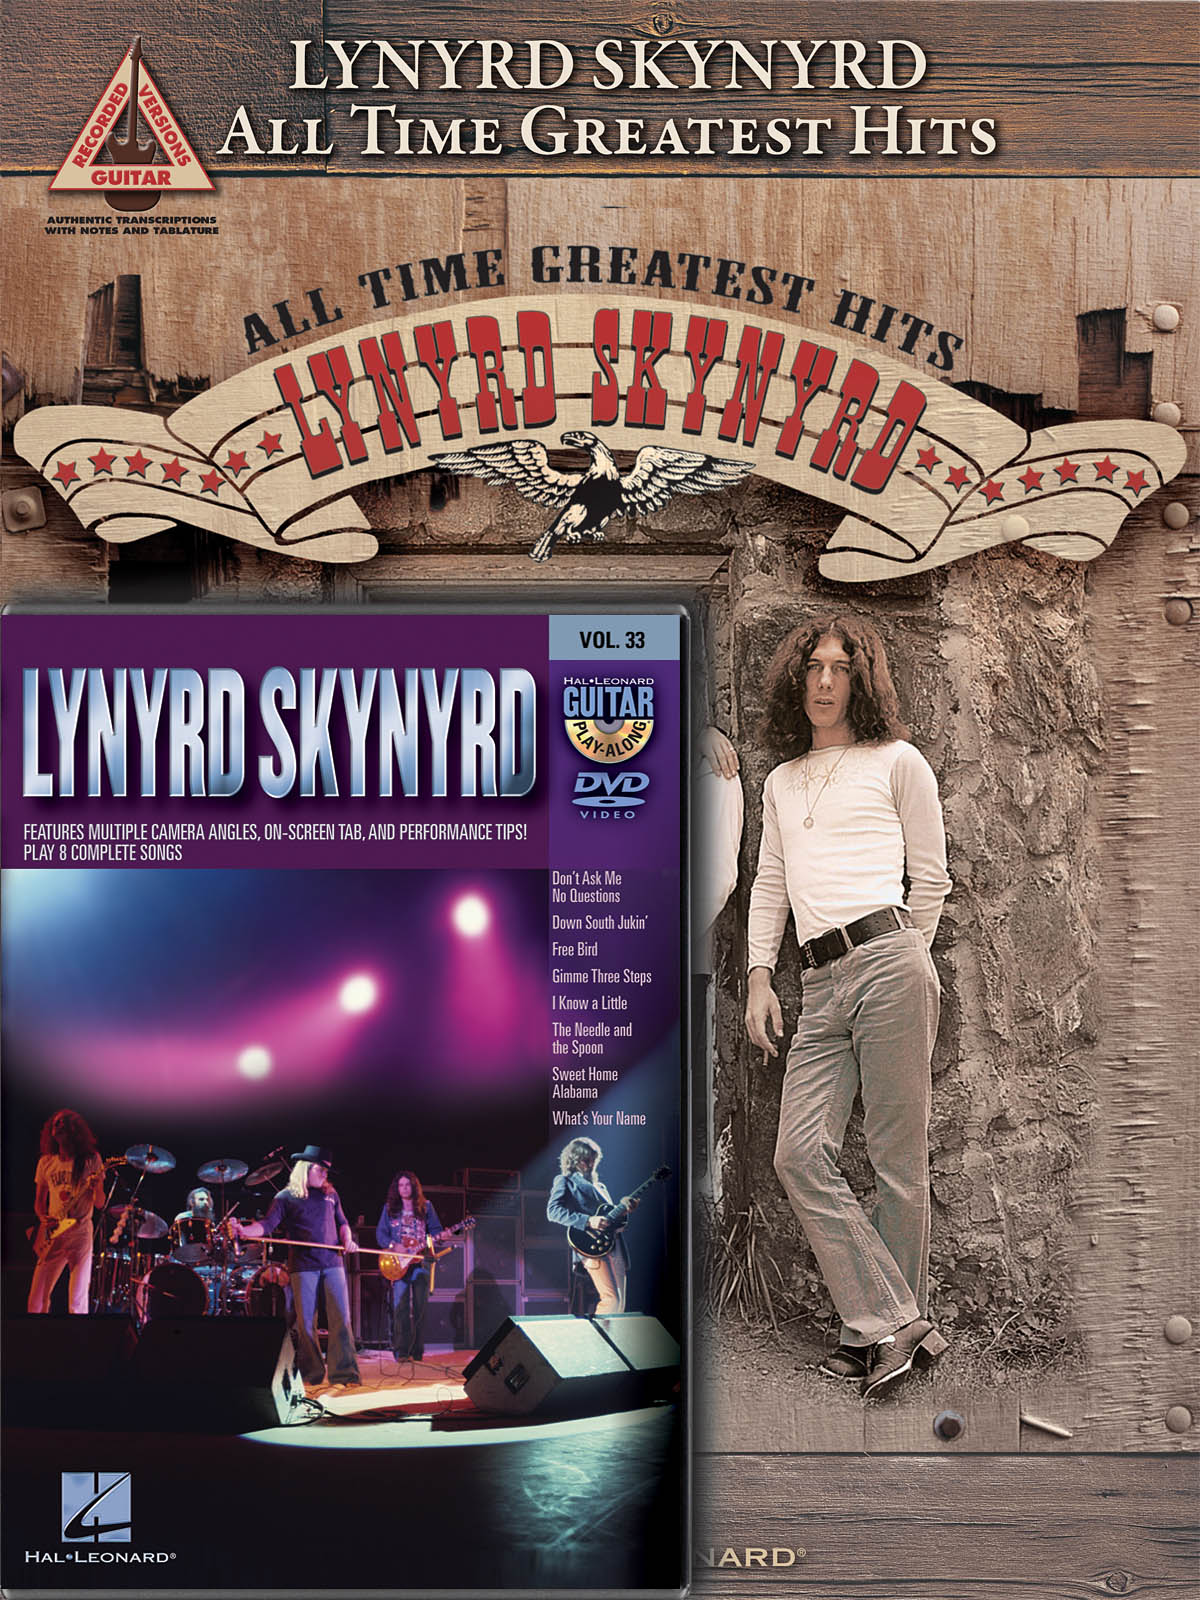 Lynyrd Skynyrd Guitar Pack - Includes Lynyrd Skynyrd Signature Licks Book/CD and Lynyrd Skynyrd Guitar Play-Along DVD